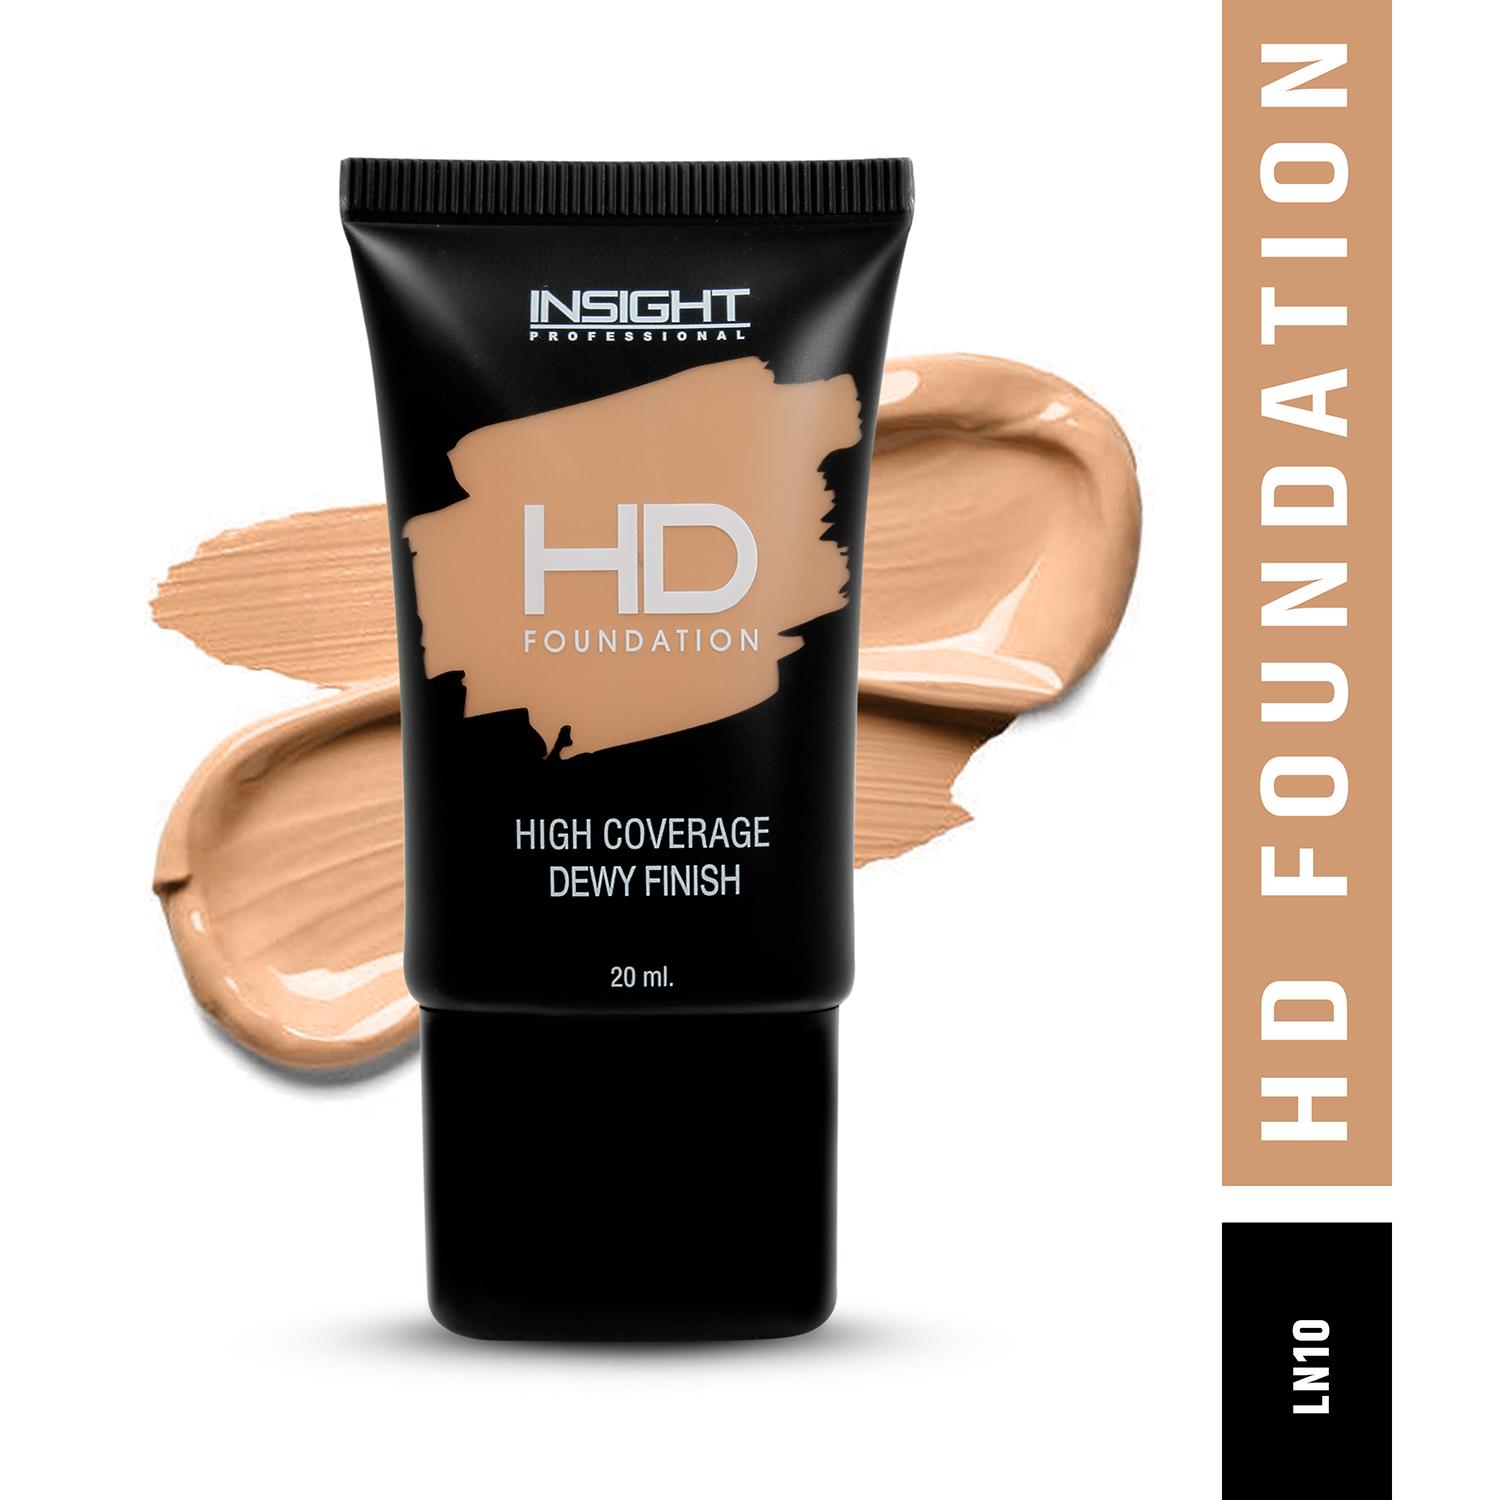 Insight Cosmetics | Insight Cosmetics Dewy Finish HD Foundation - LN 10 (20ml)